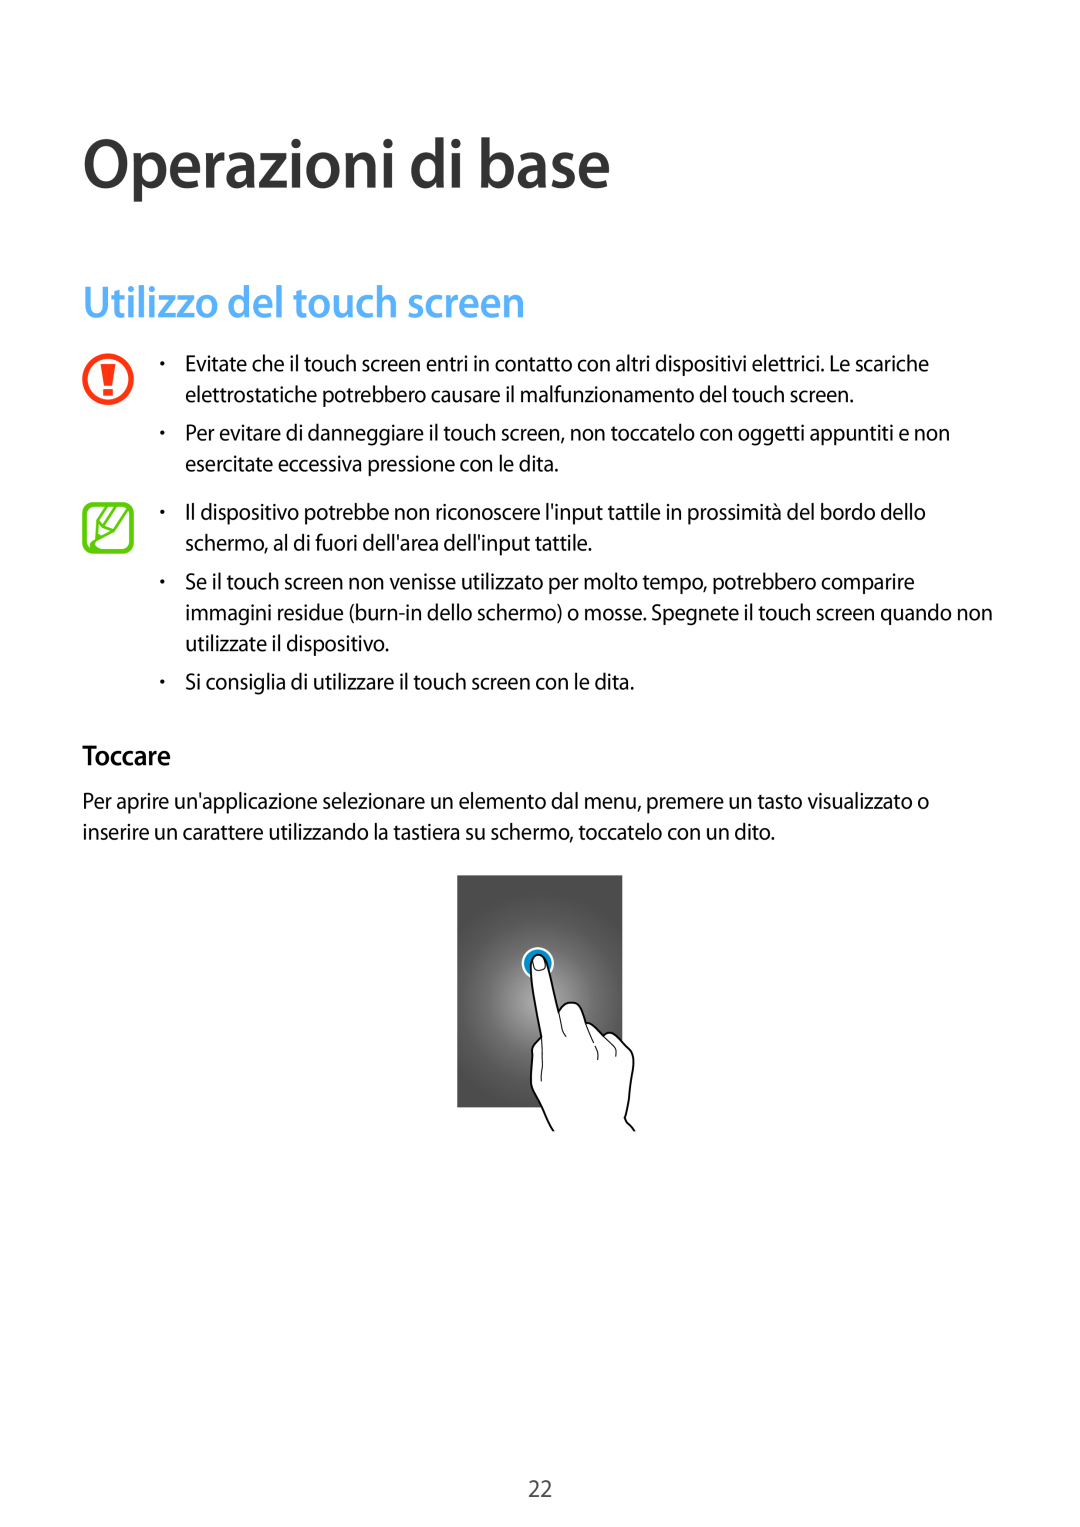 Samsung SM-G900FZKAVD2, SM-G900FZKADBT, SM-G900FZWADBT manual Operazioni di base, Utilizzo del touch screen, Toccare 